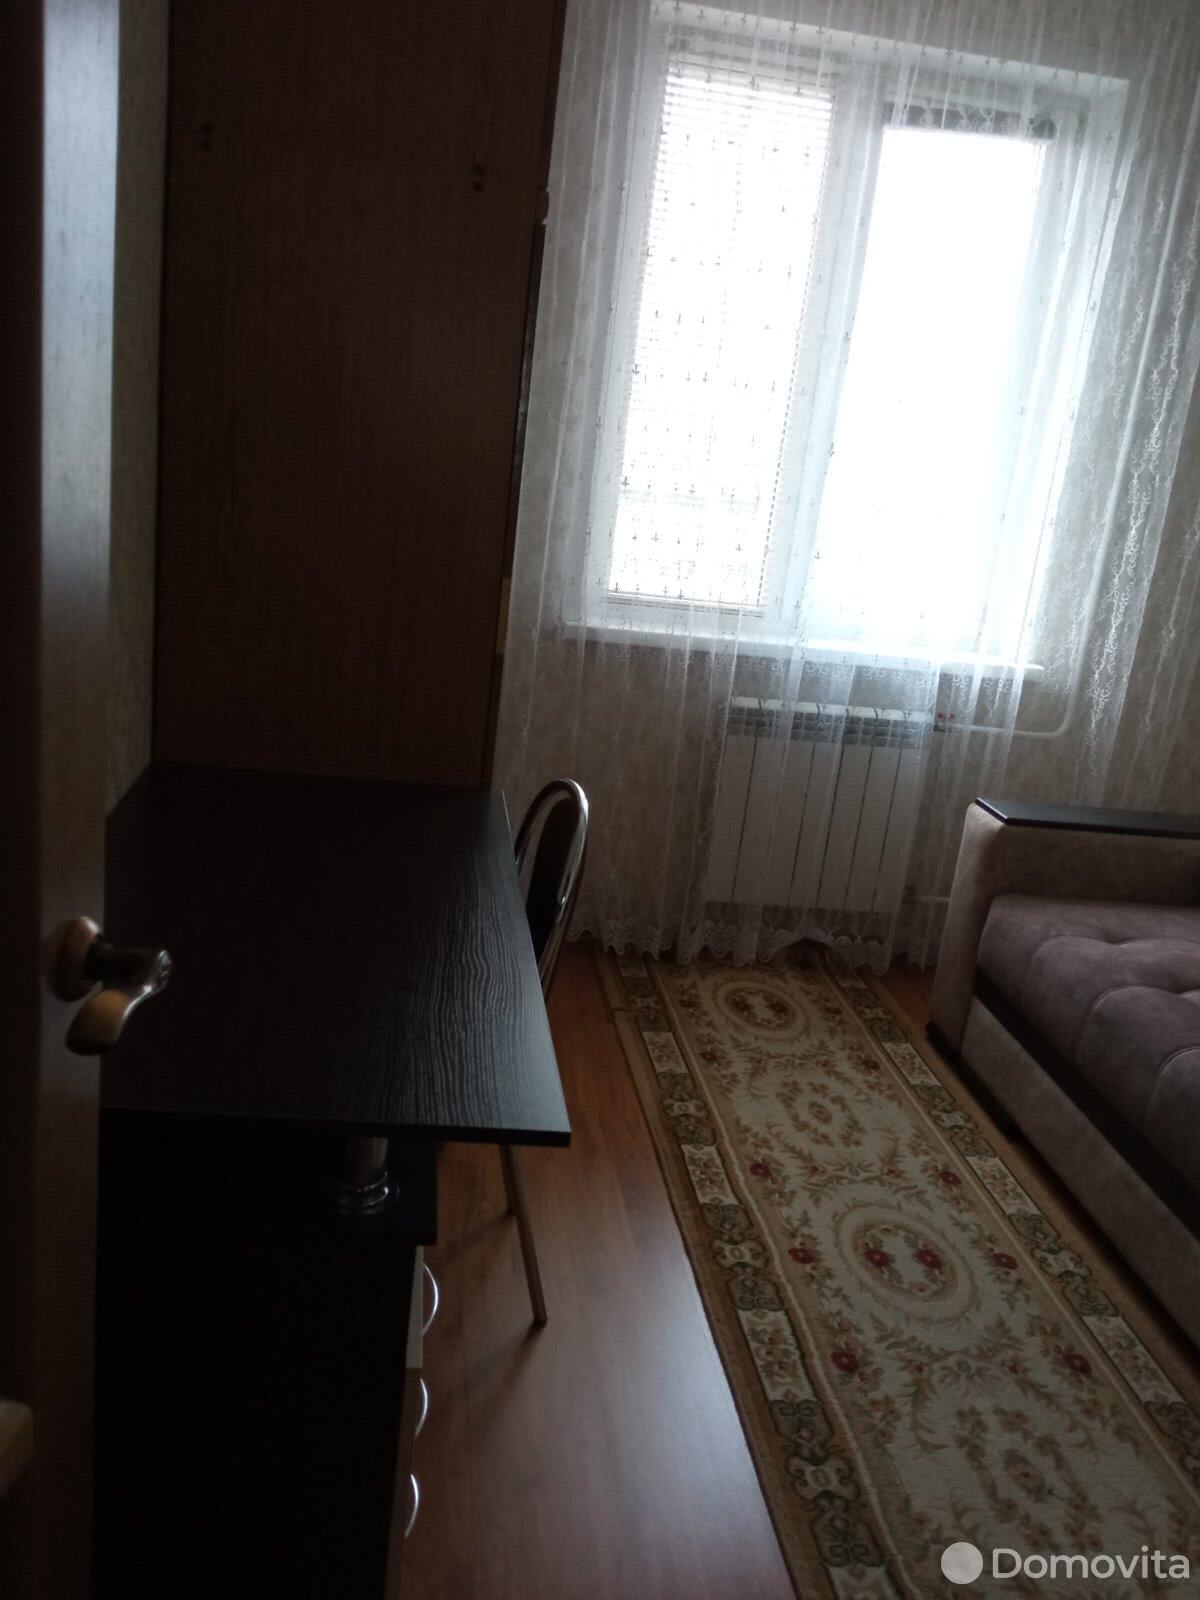 комната, Минск, ул. Кунцевщина, д. 38, стоимость аренды 320 р./мес.